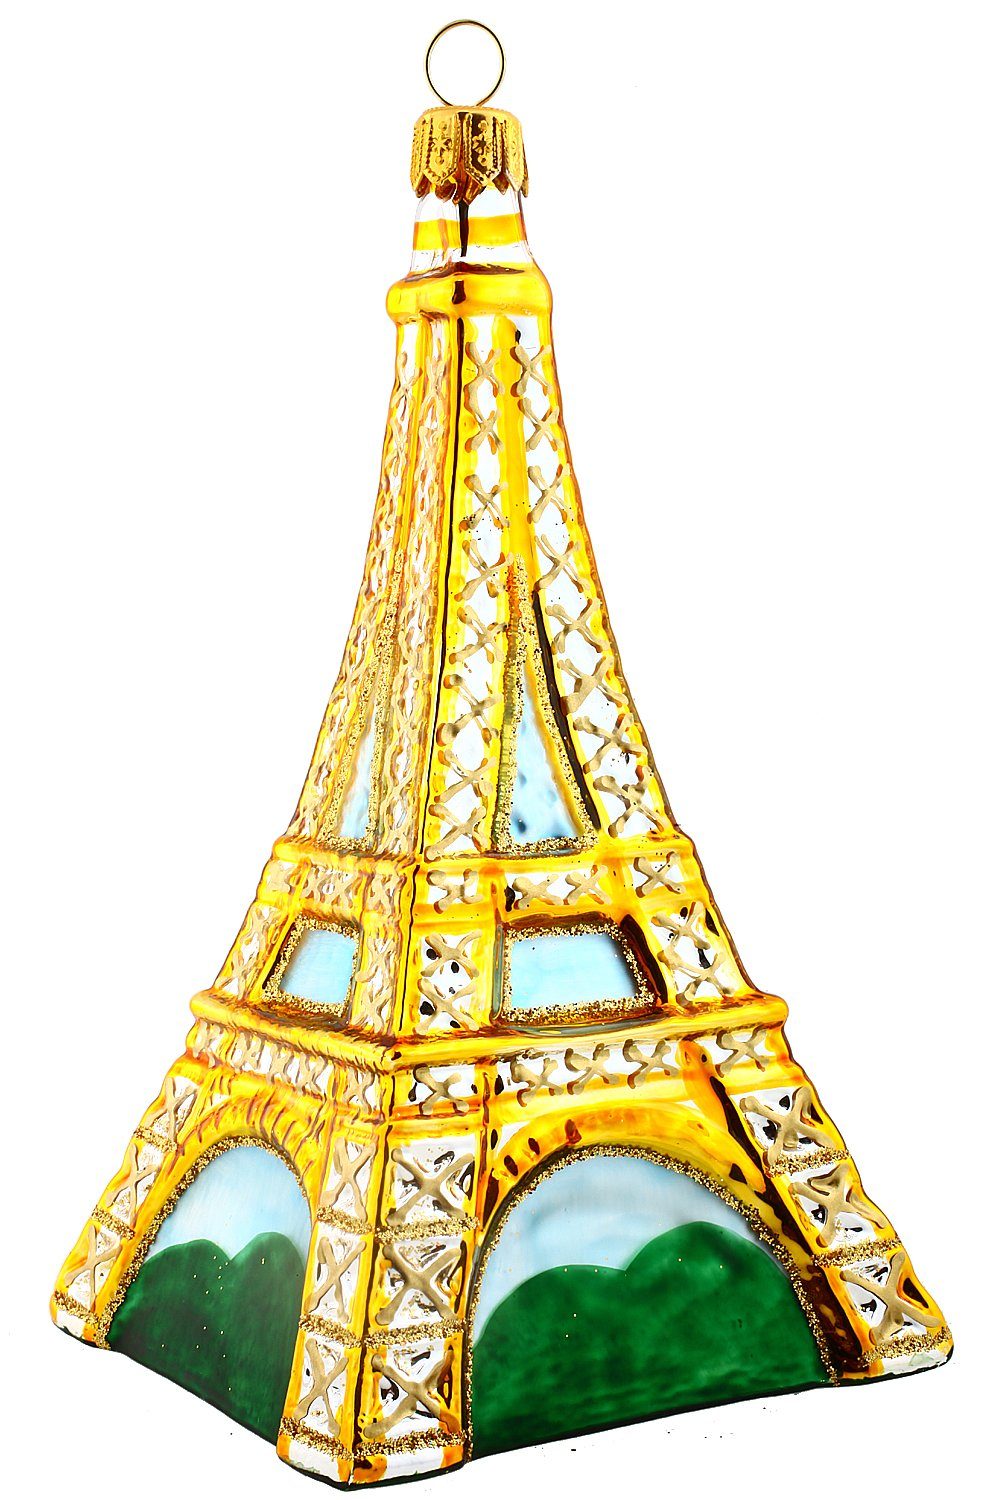 Dekohänger - handdekoriert Weihnachtskontor mundgeblasen - Eiffelturm, Hamburger Christbaumschmuck